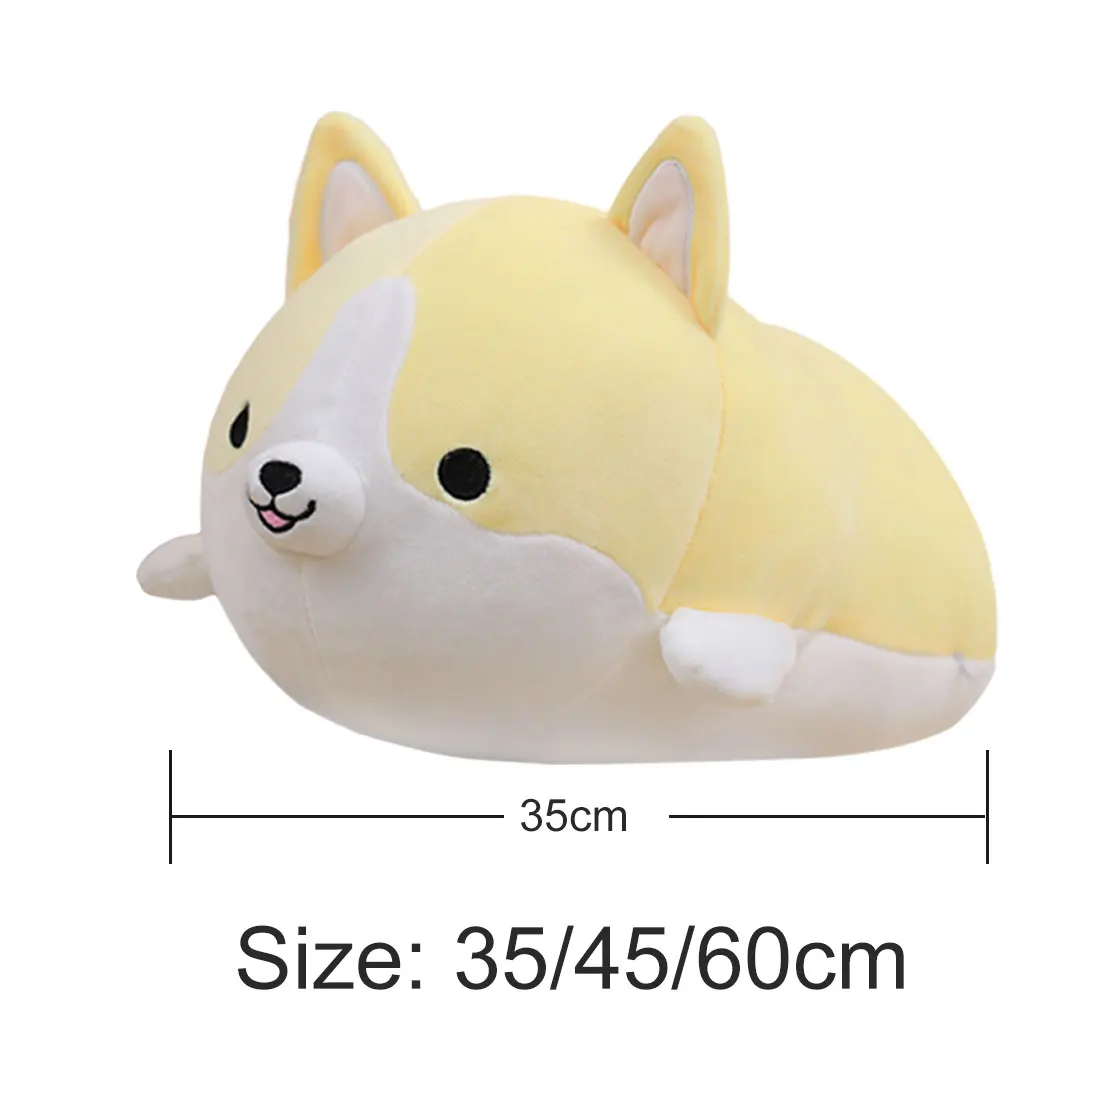 30/45/60cm Cute Corgi Dog Plush Toy Stuffed Soft Animal Cartoon Pillow Lovely Christmas Gift for Kids Kawaii Present